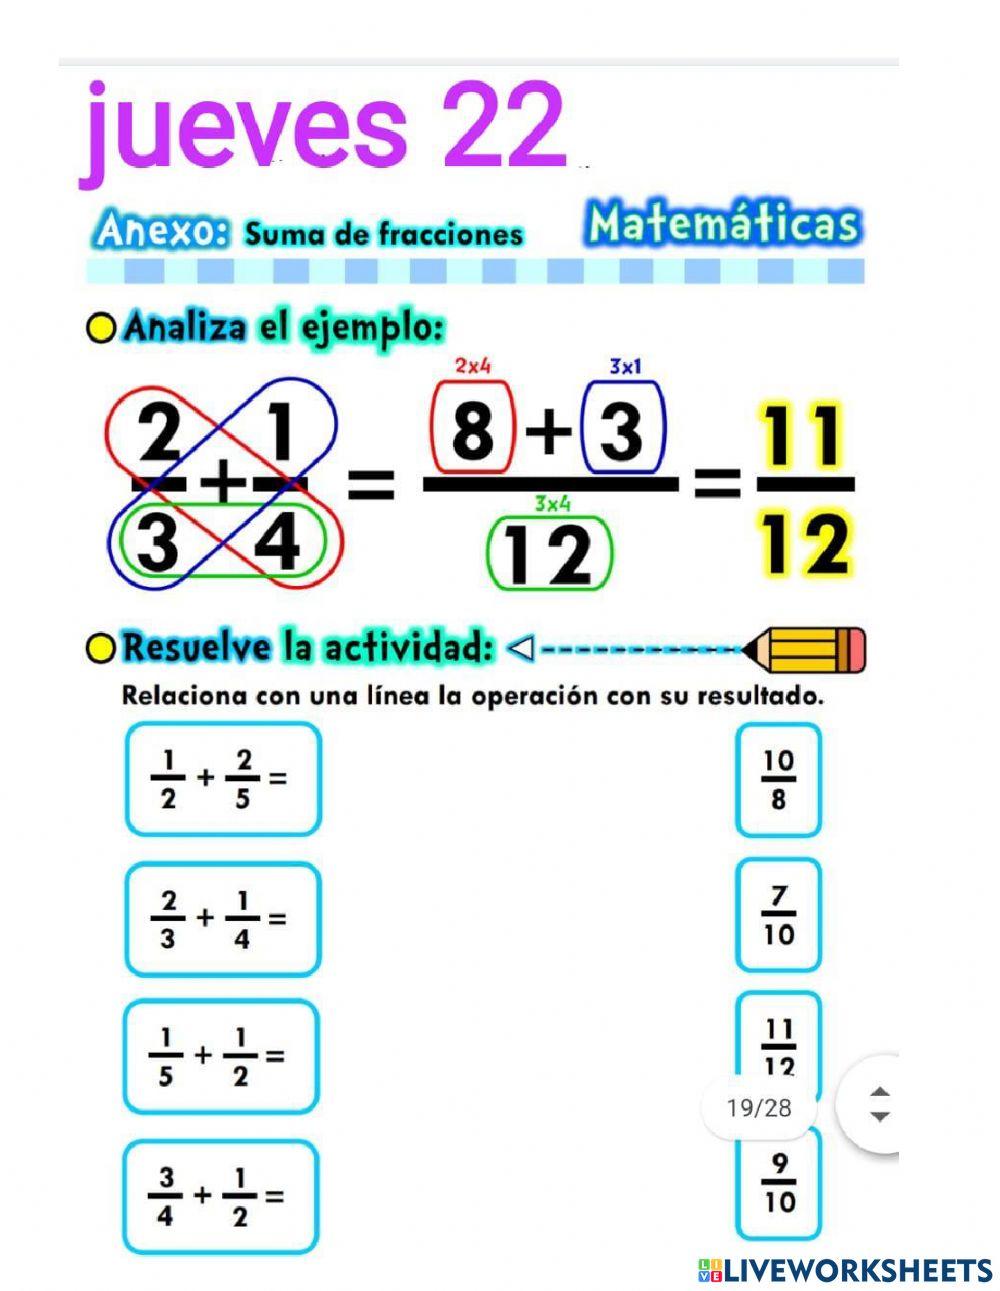 Jueves 22 matemáticas